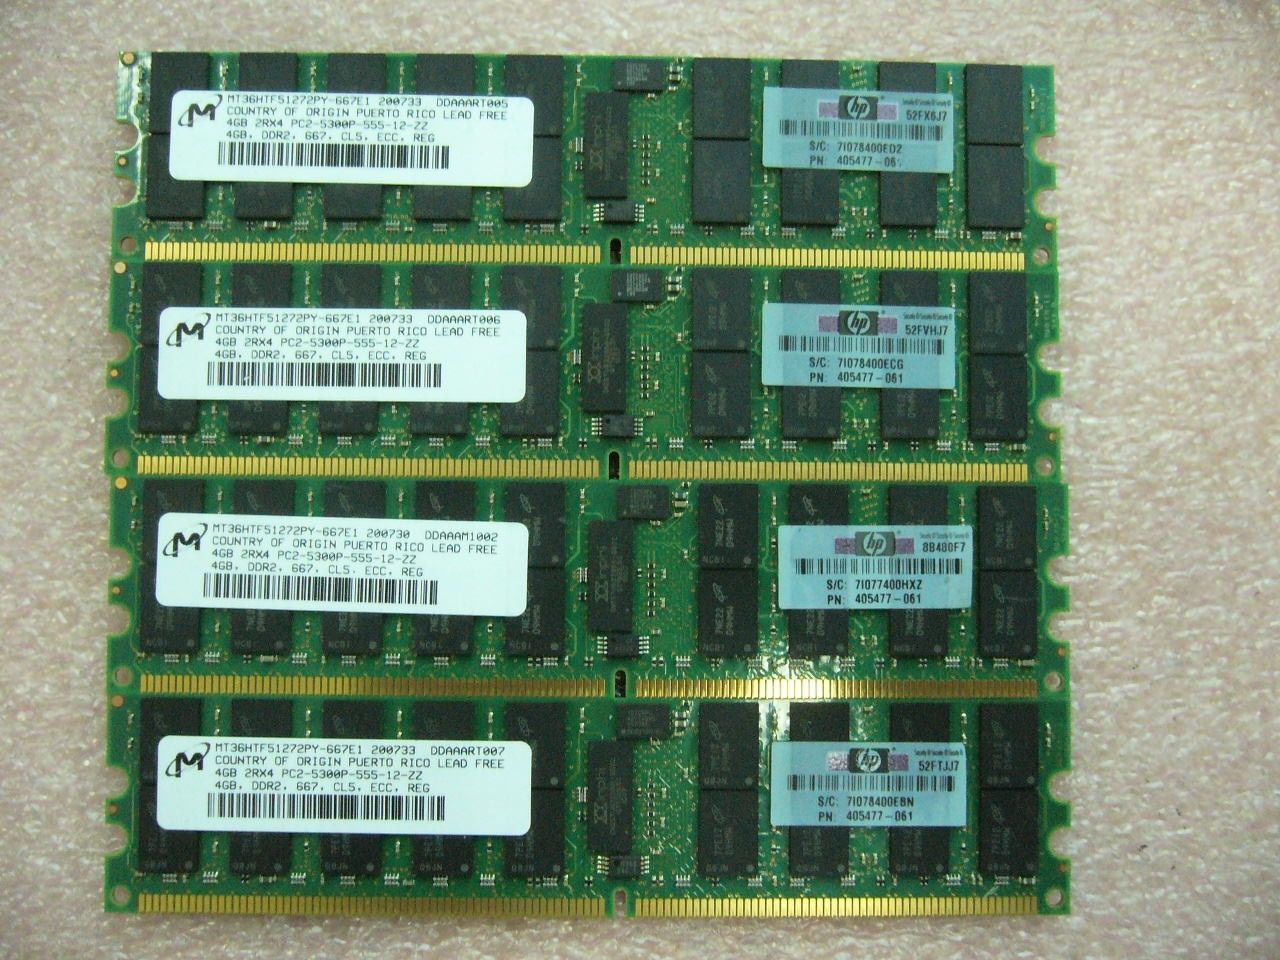 QTY 1x 4GB PC2-5300P 2Rx4 DDR2 677MHz ECC Registered Memory HP P/N 405477-061 - Click Image to Close